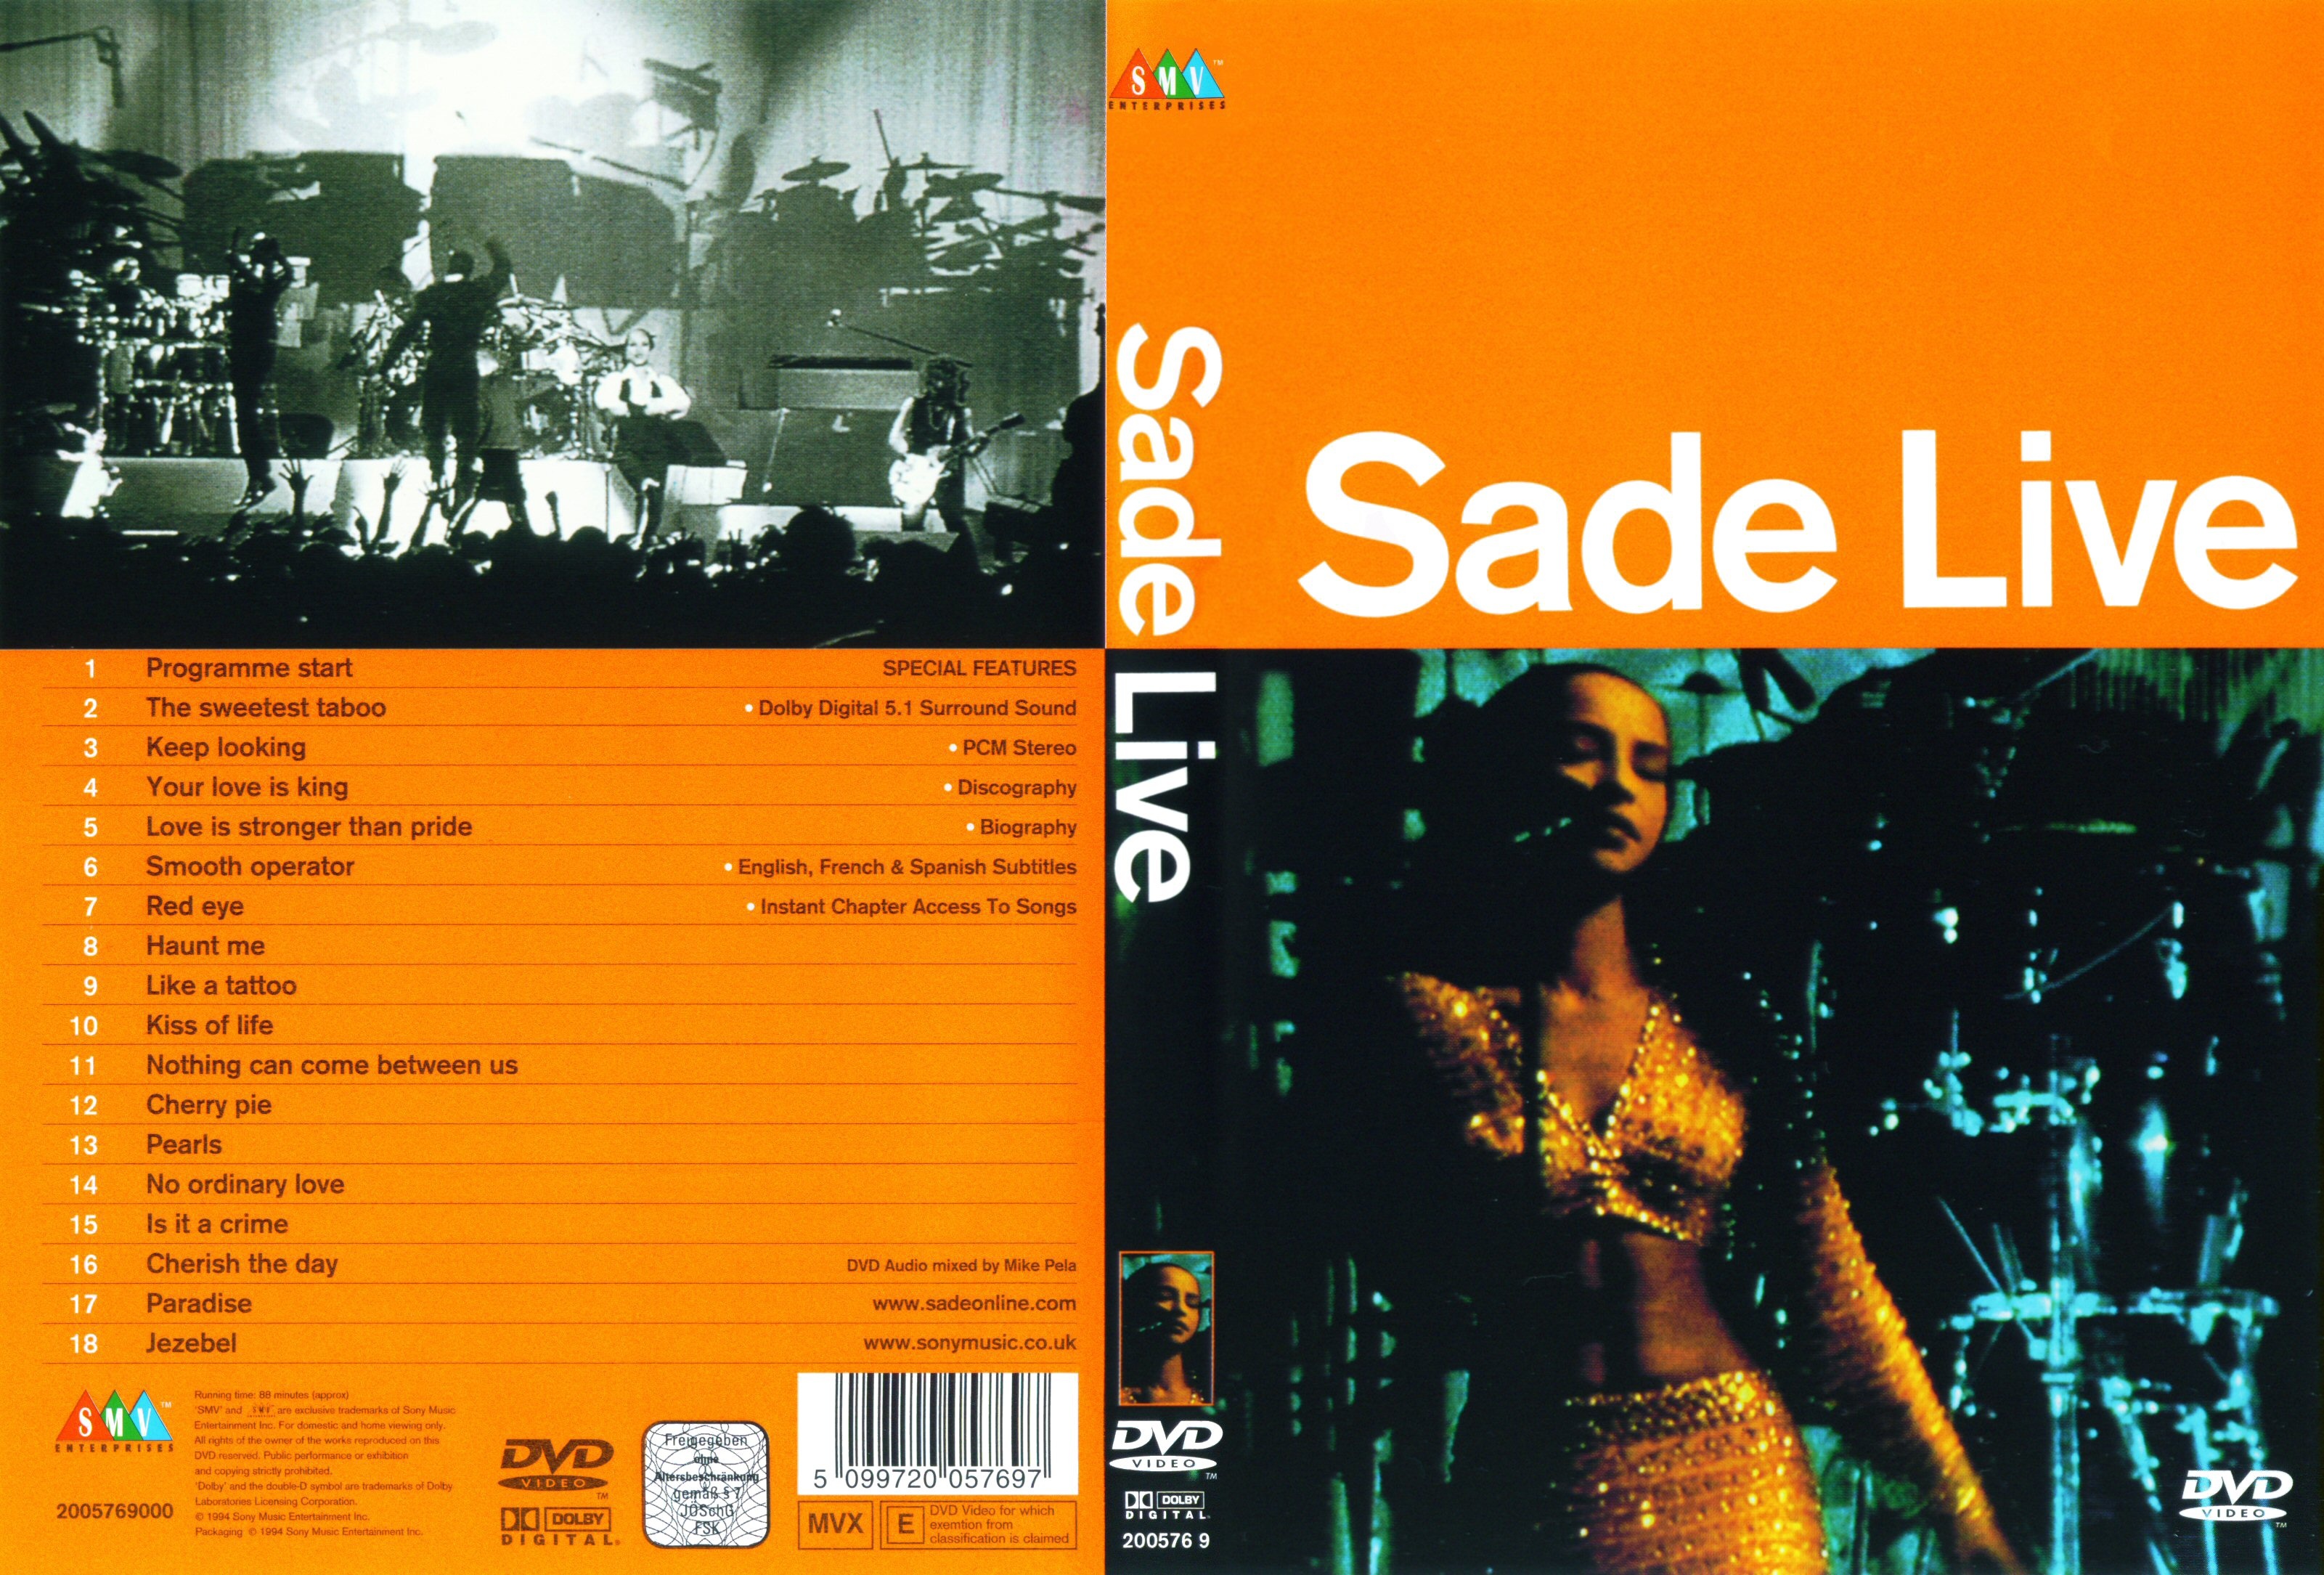 Jaquette DVD Sade Live